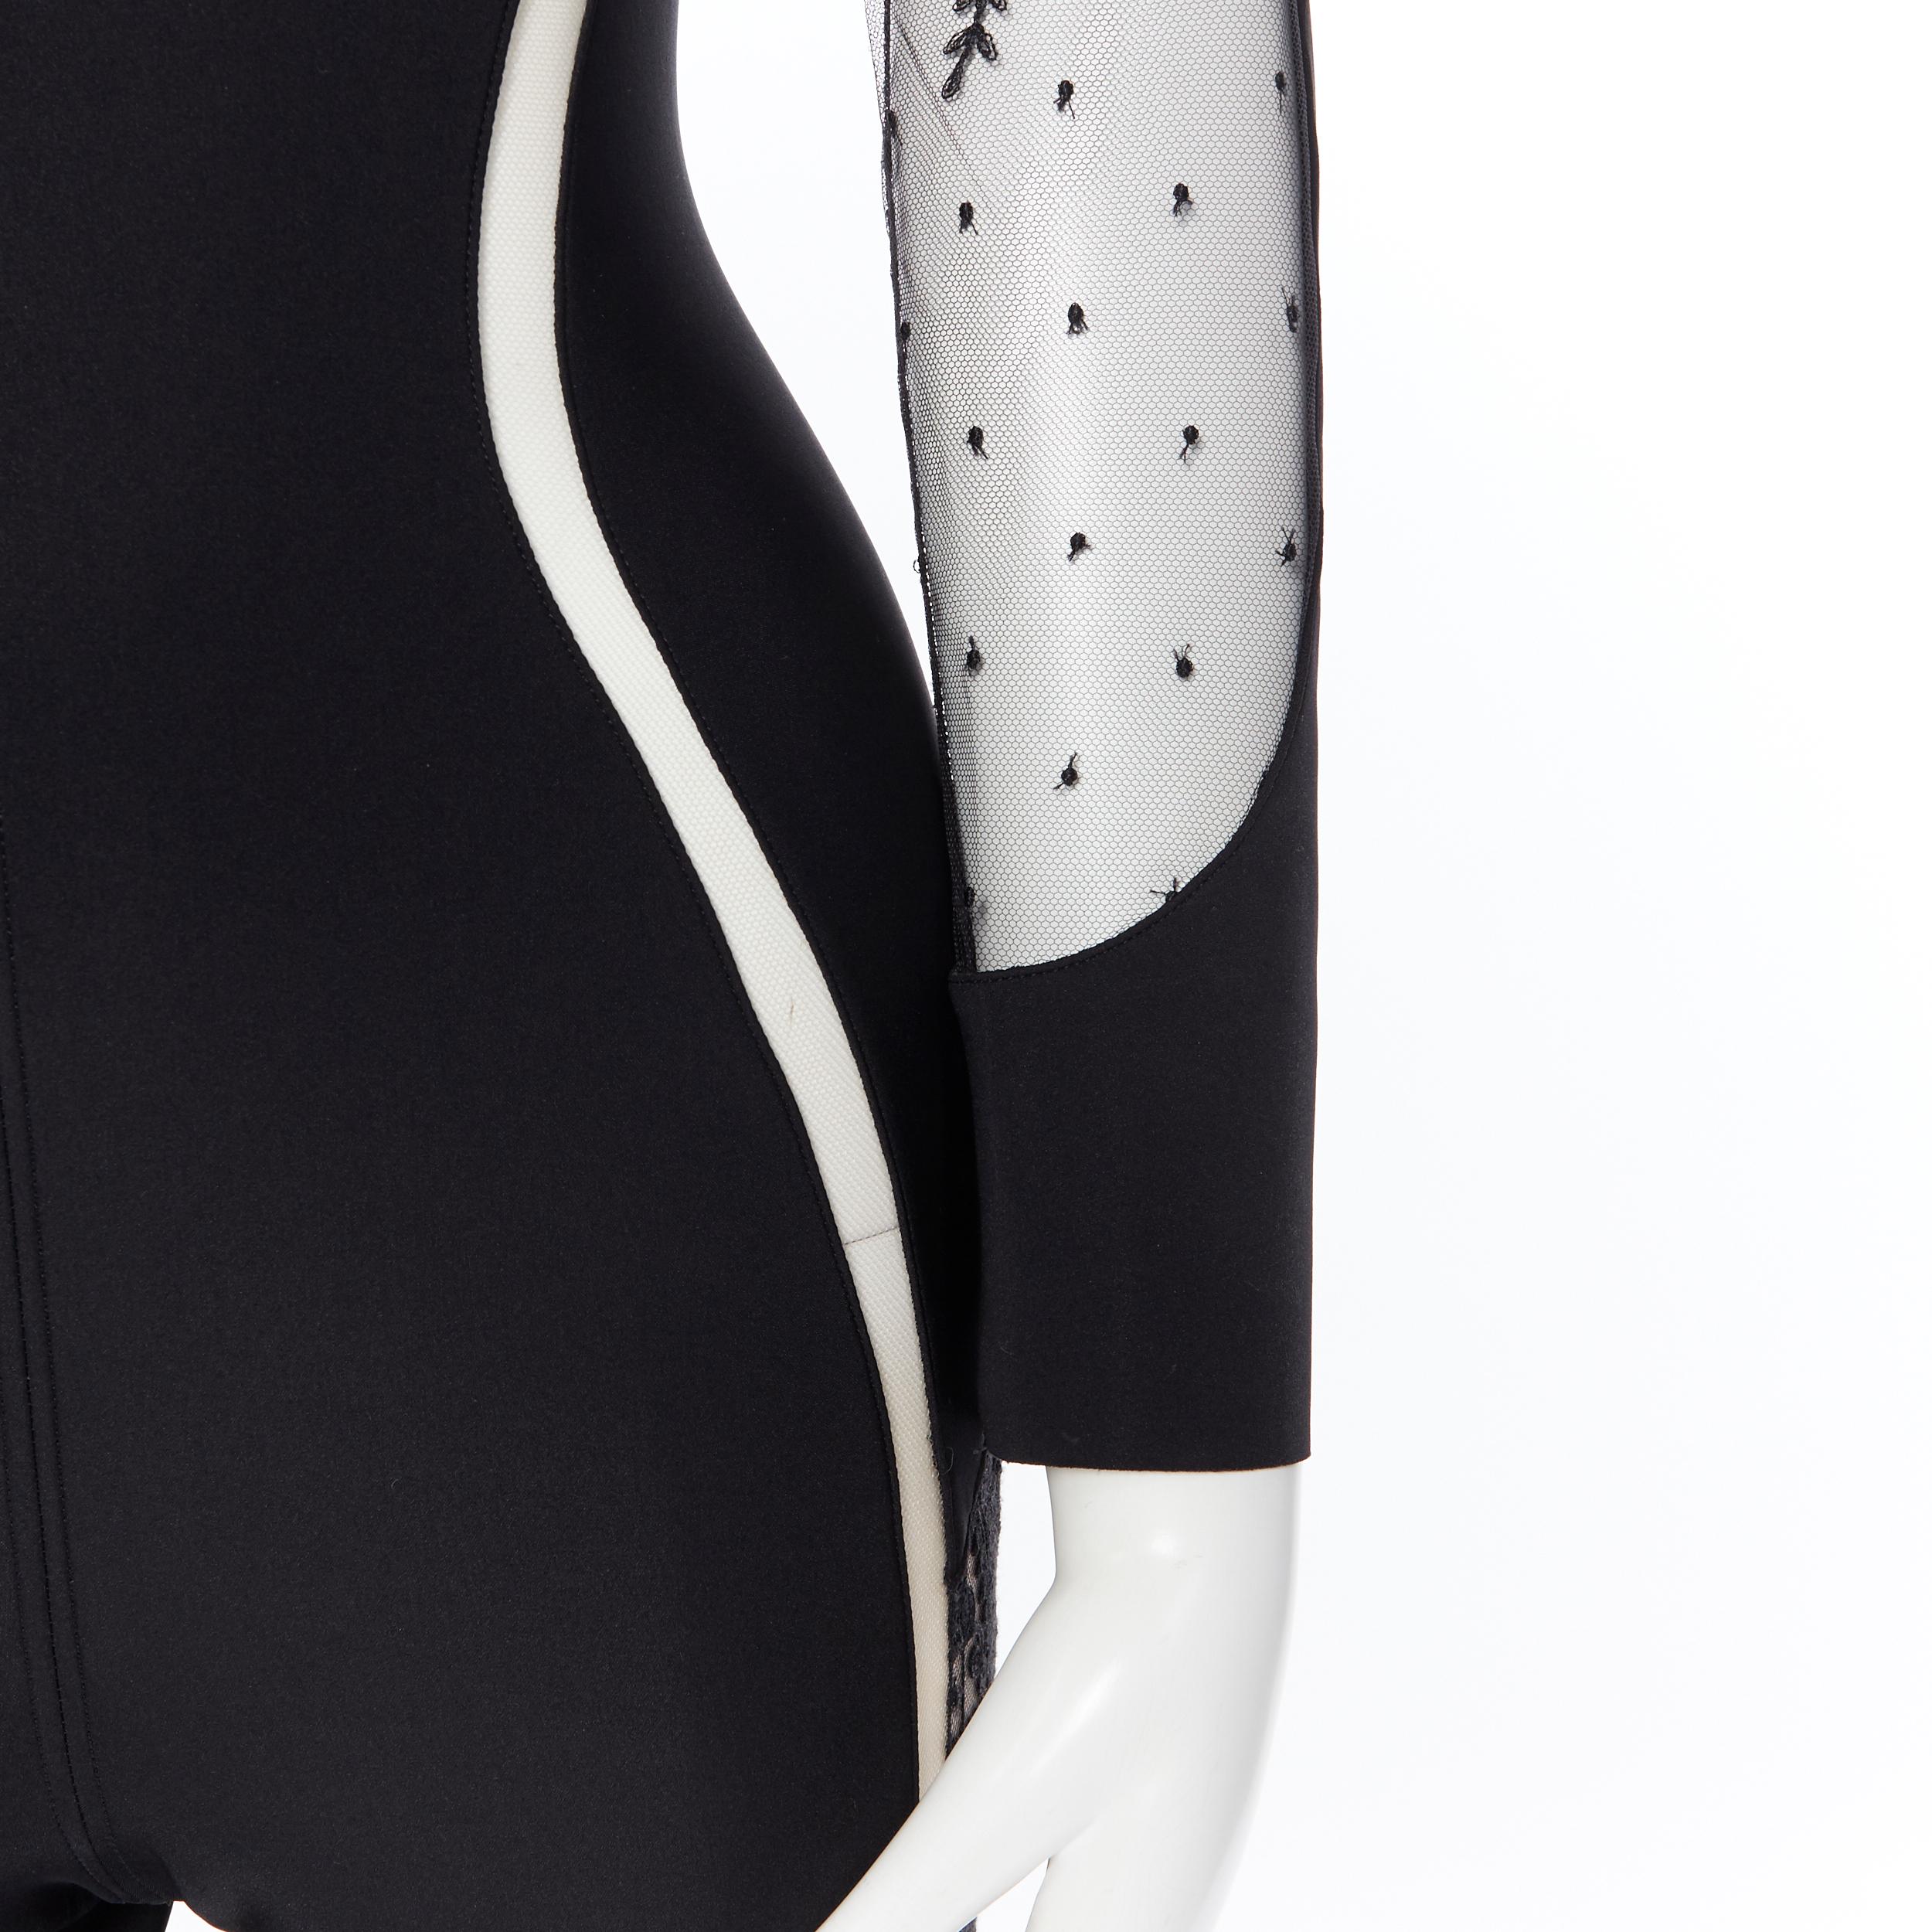 new LA PERLA Desire black neoprene floral lace long sleeve bodycon jumpsuit L 1